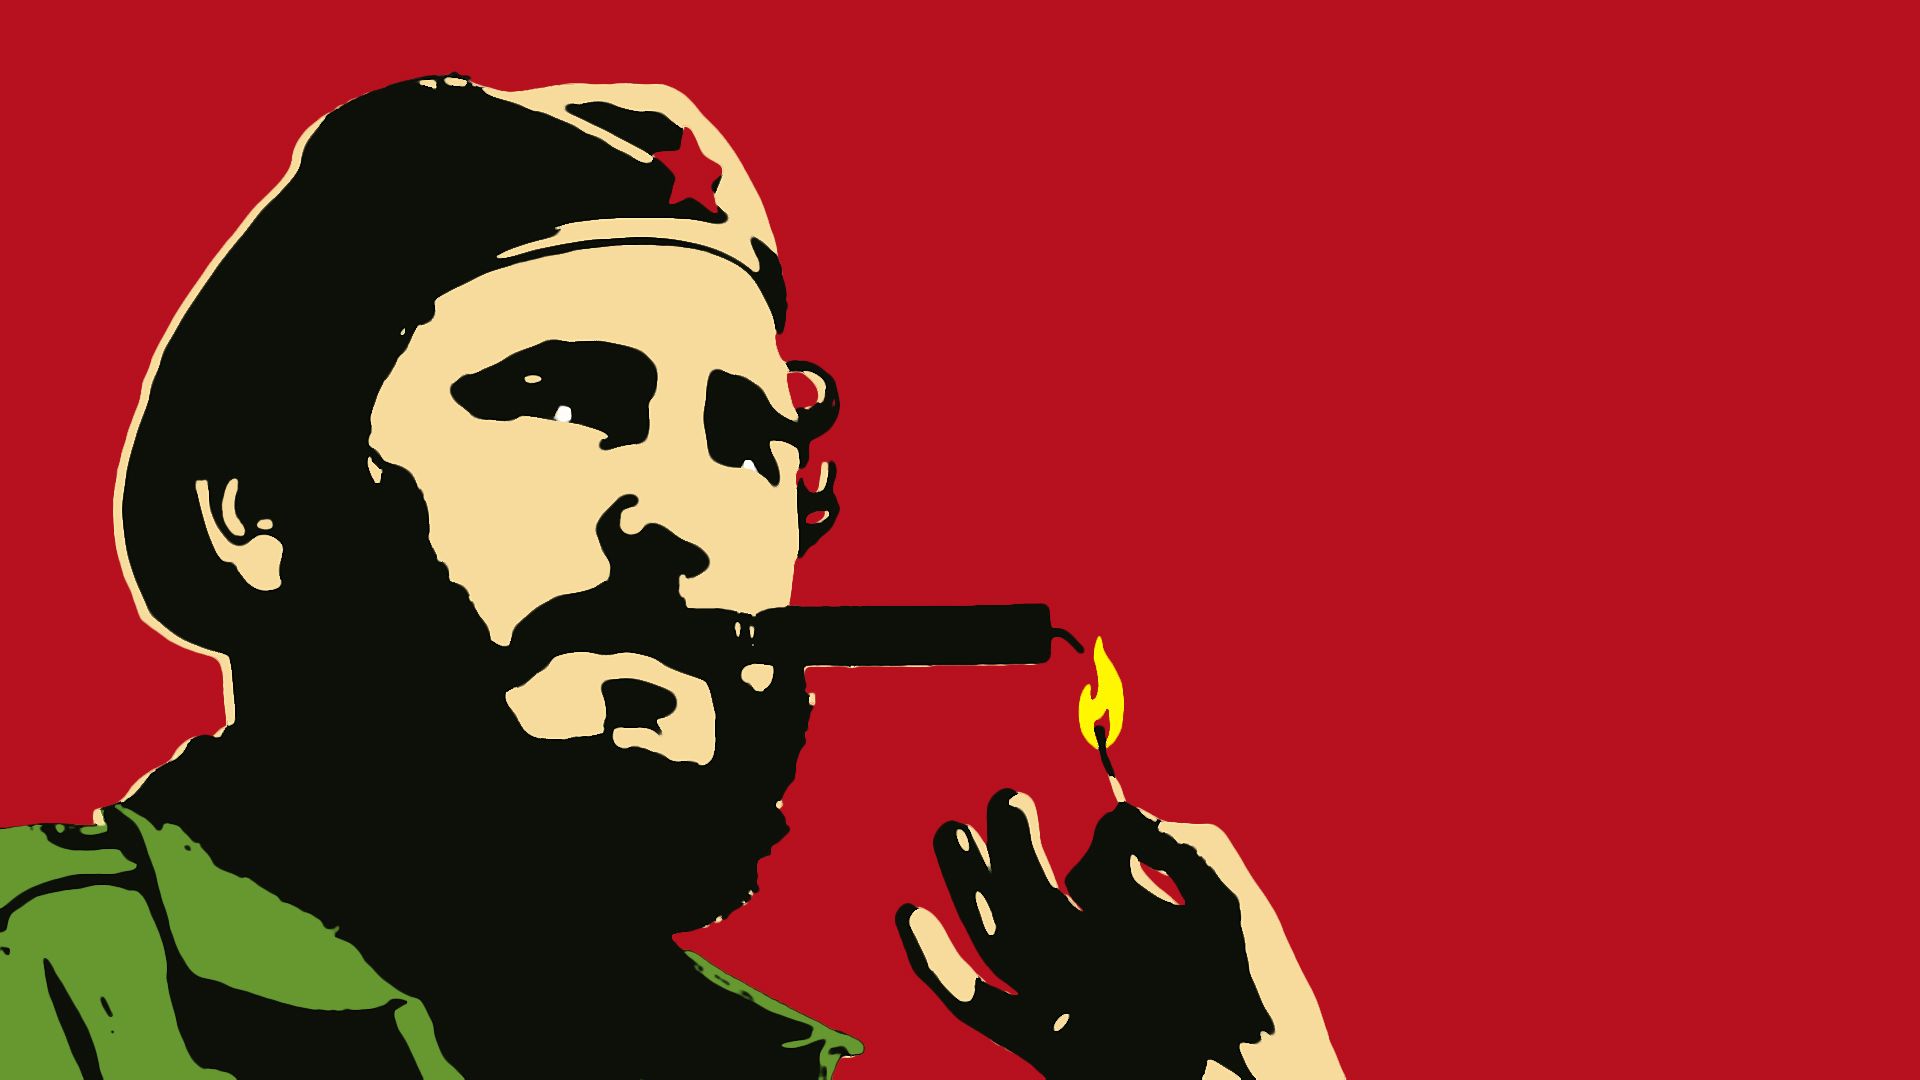 638 Ways to Kill Castro background